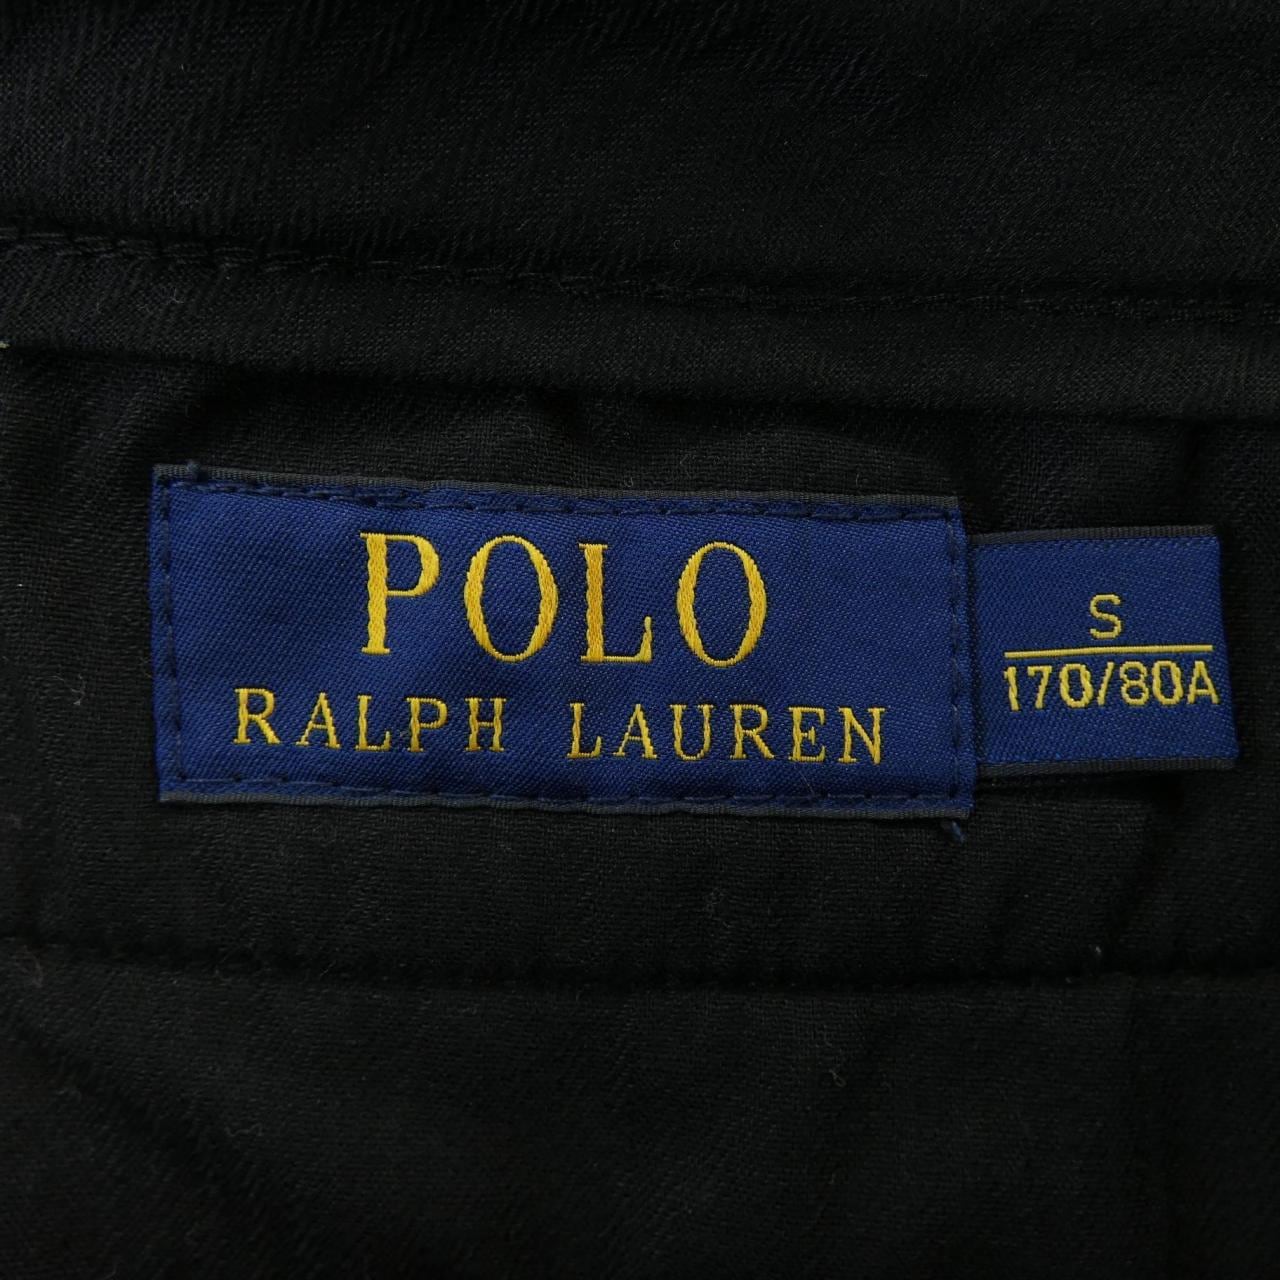 Polo Ralph Lauren POLO RALPH LAUREN pants